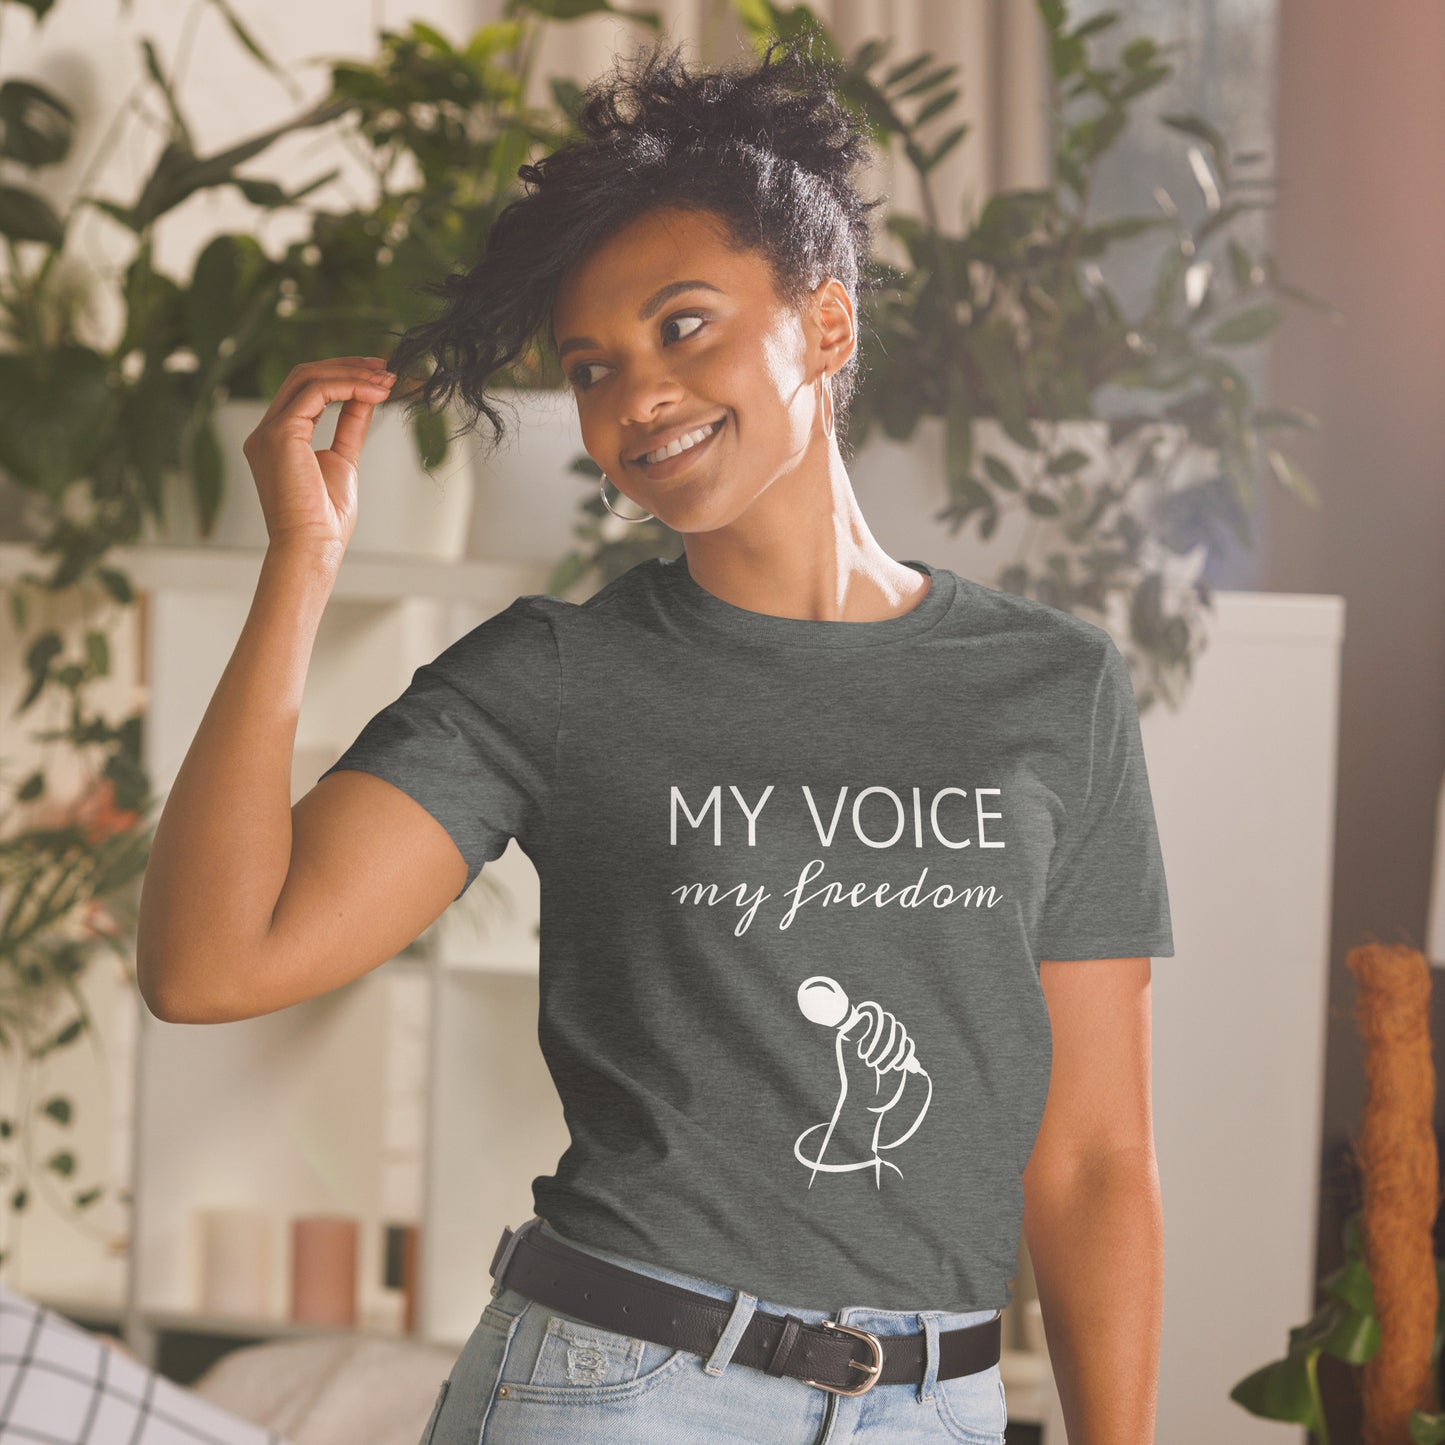 My Voice, My Freedom. Tee shirt